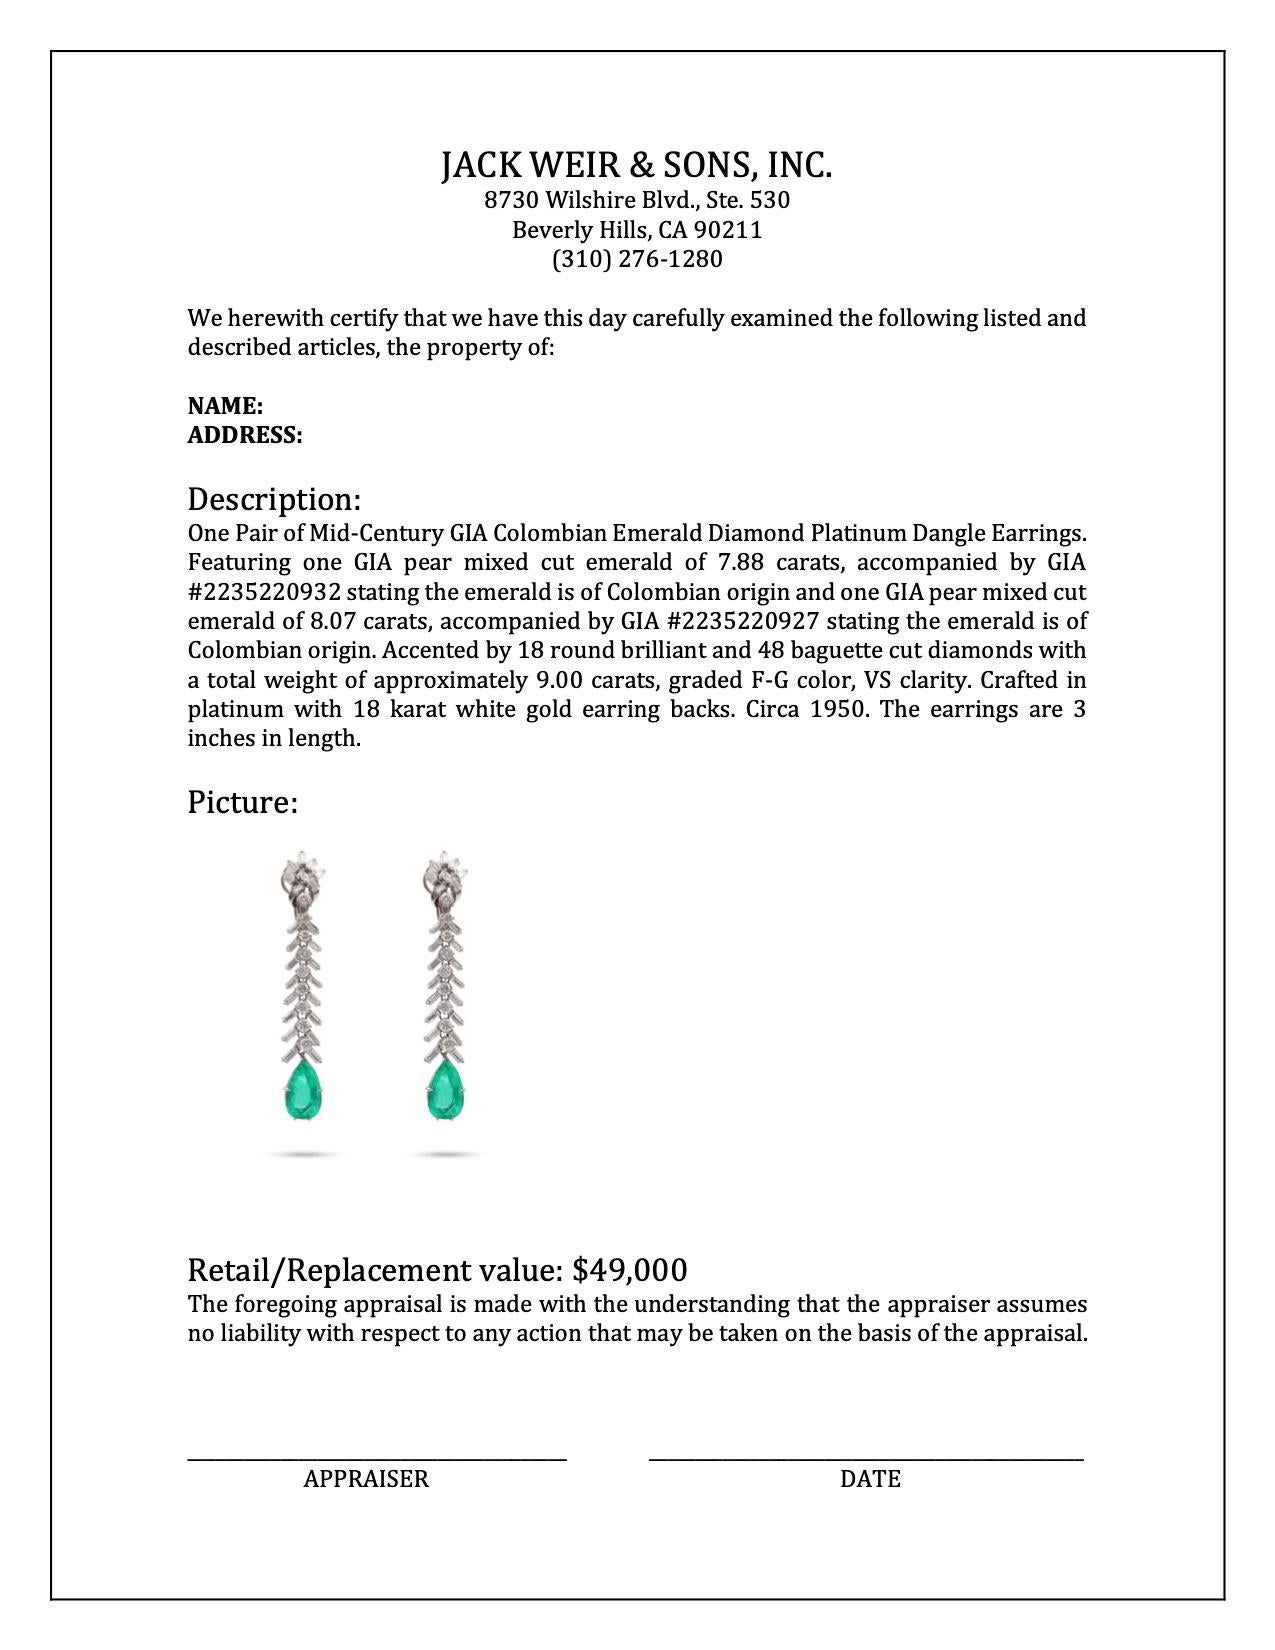 Mid-Century GIA Colombian Emerald Diamond Platinum Dangle Earrings 1